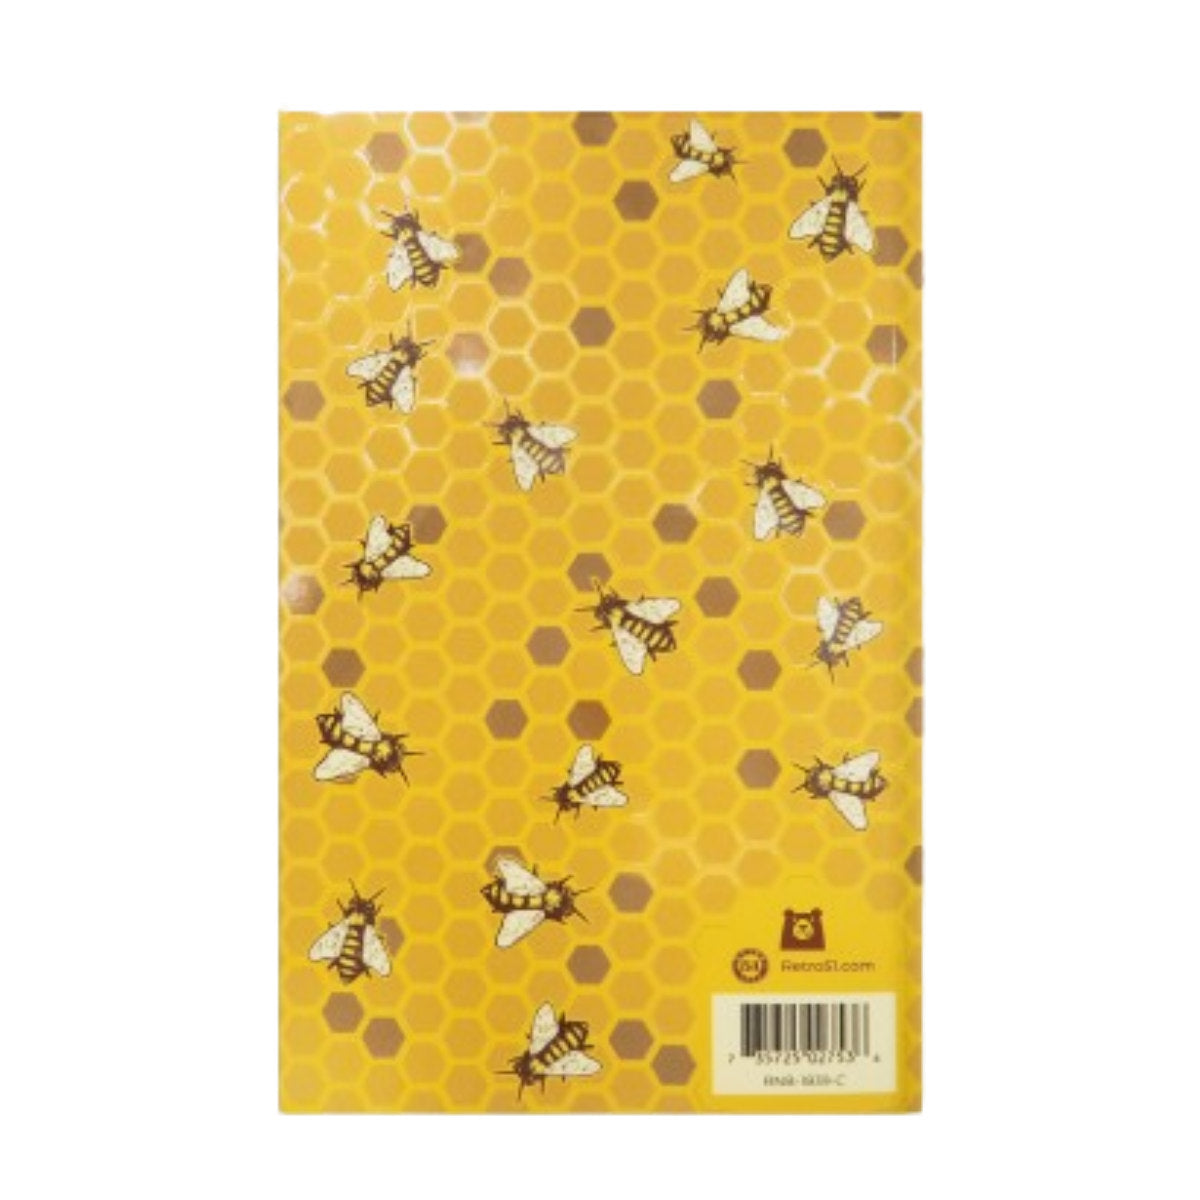 Retro 51 Tornado 'Buzz' Honeybee Rescue Classic Notebook-Pen Boutique Ltd